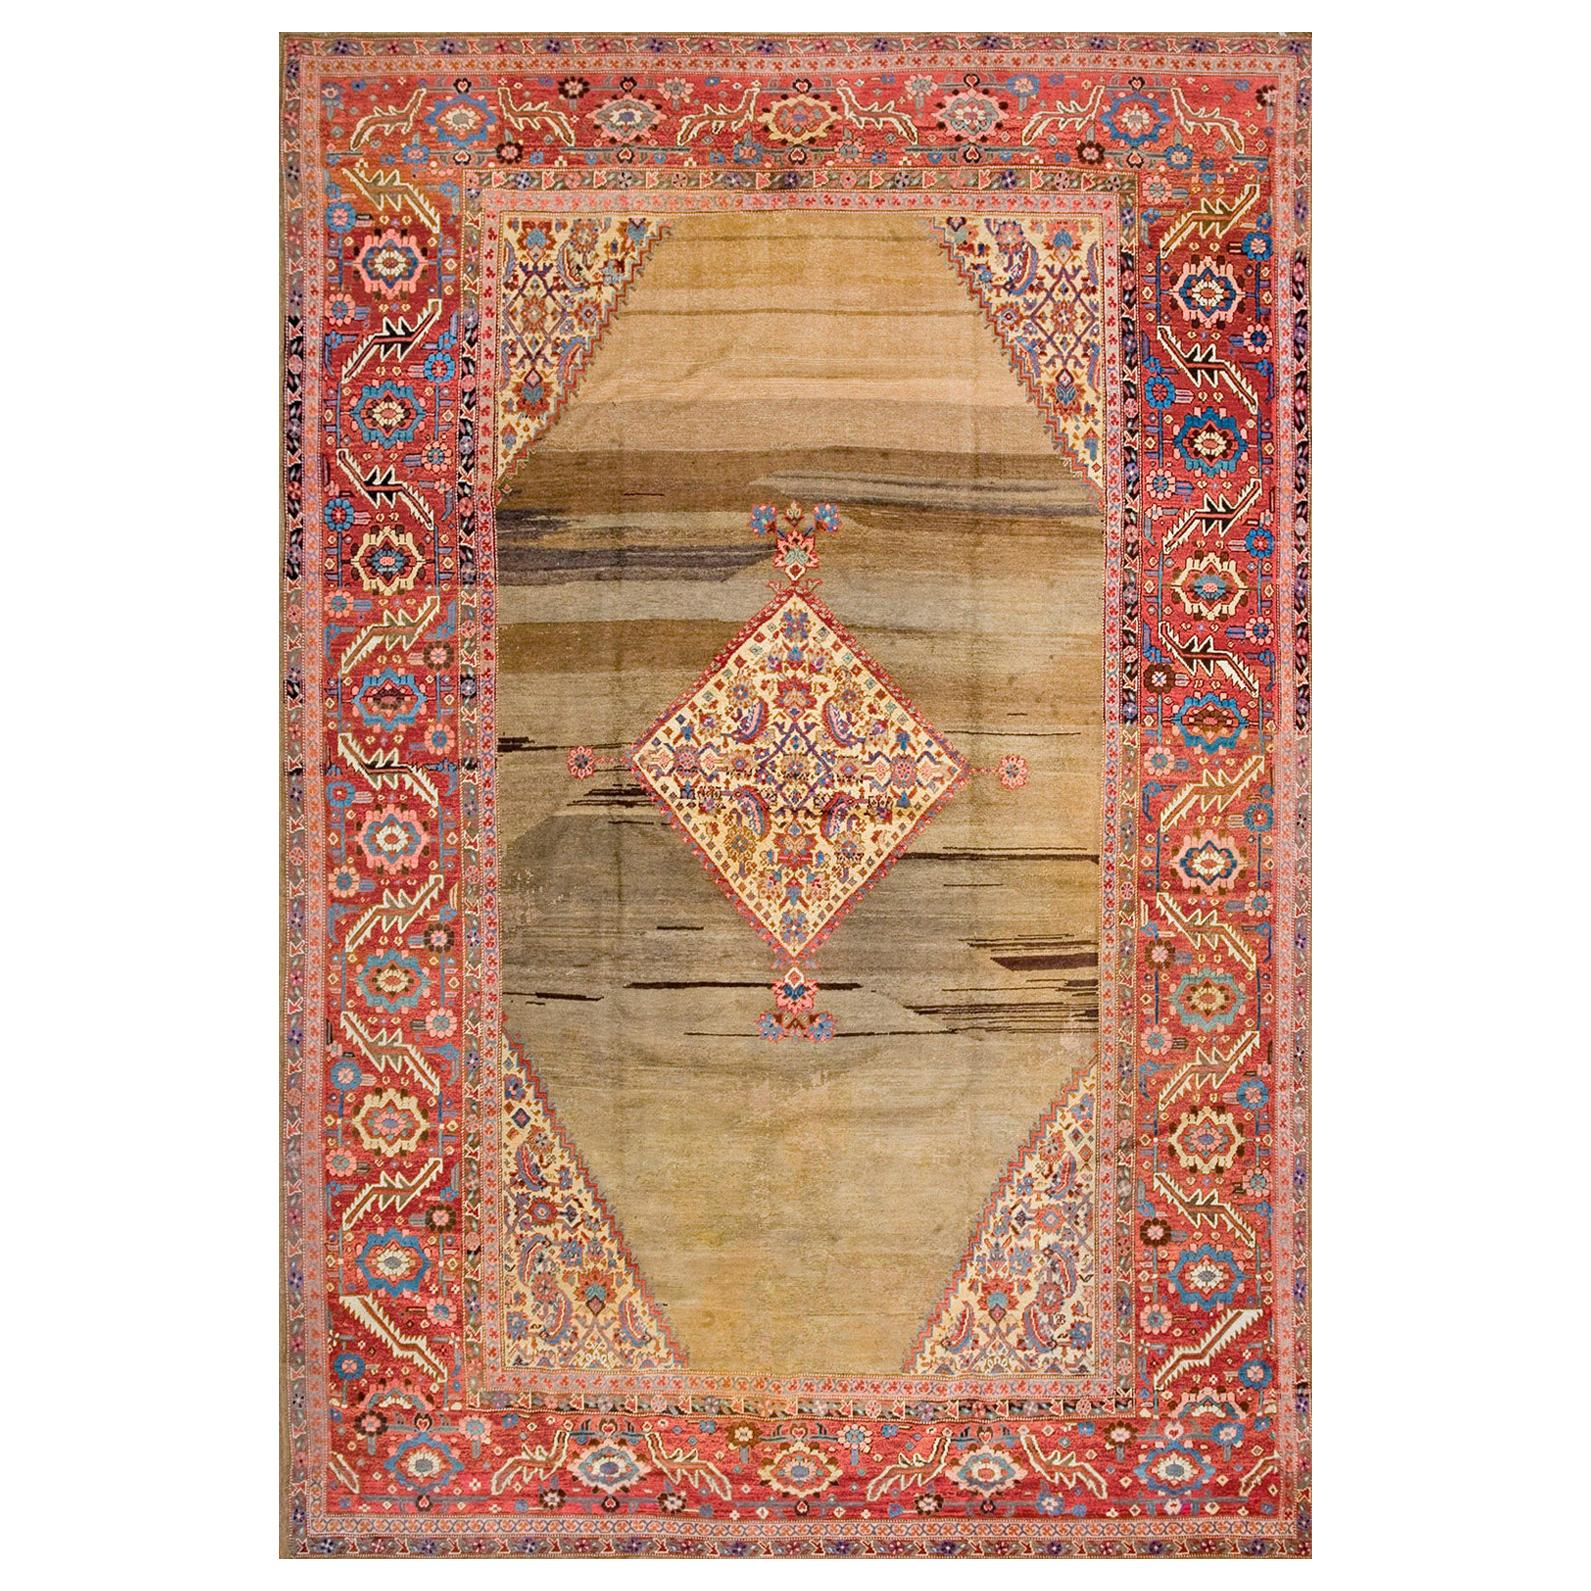 19th Century N.W. Persian Bakshaiesh Carpet ( 9' x 12'6" - 275 x 380 ) For Sale